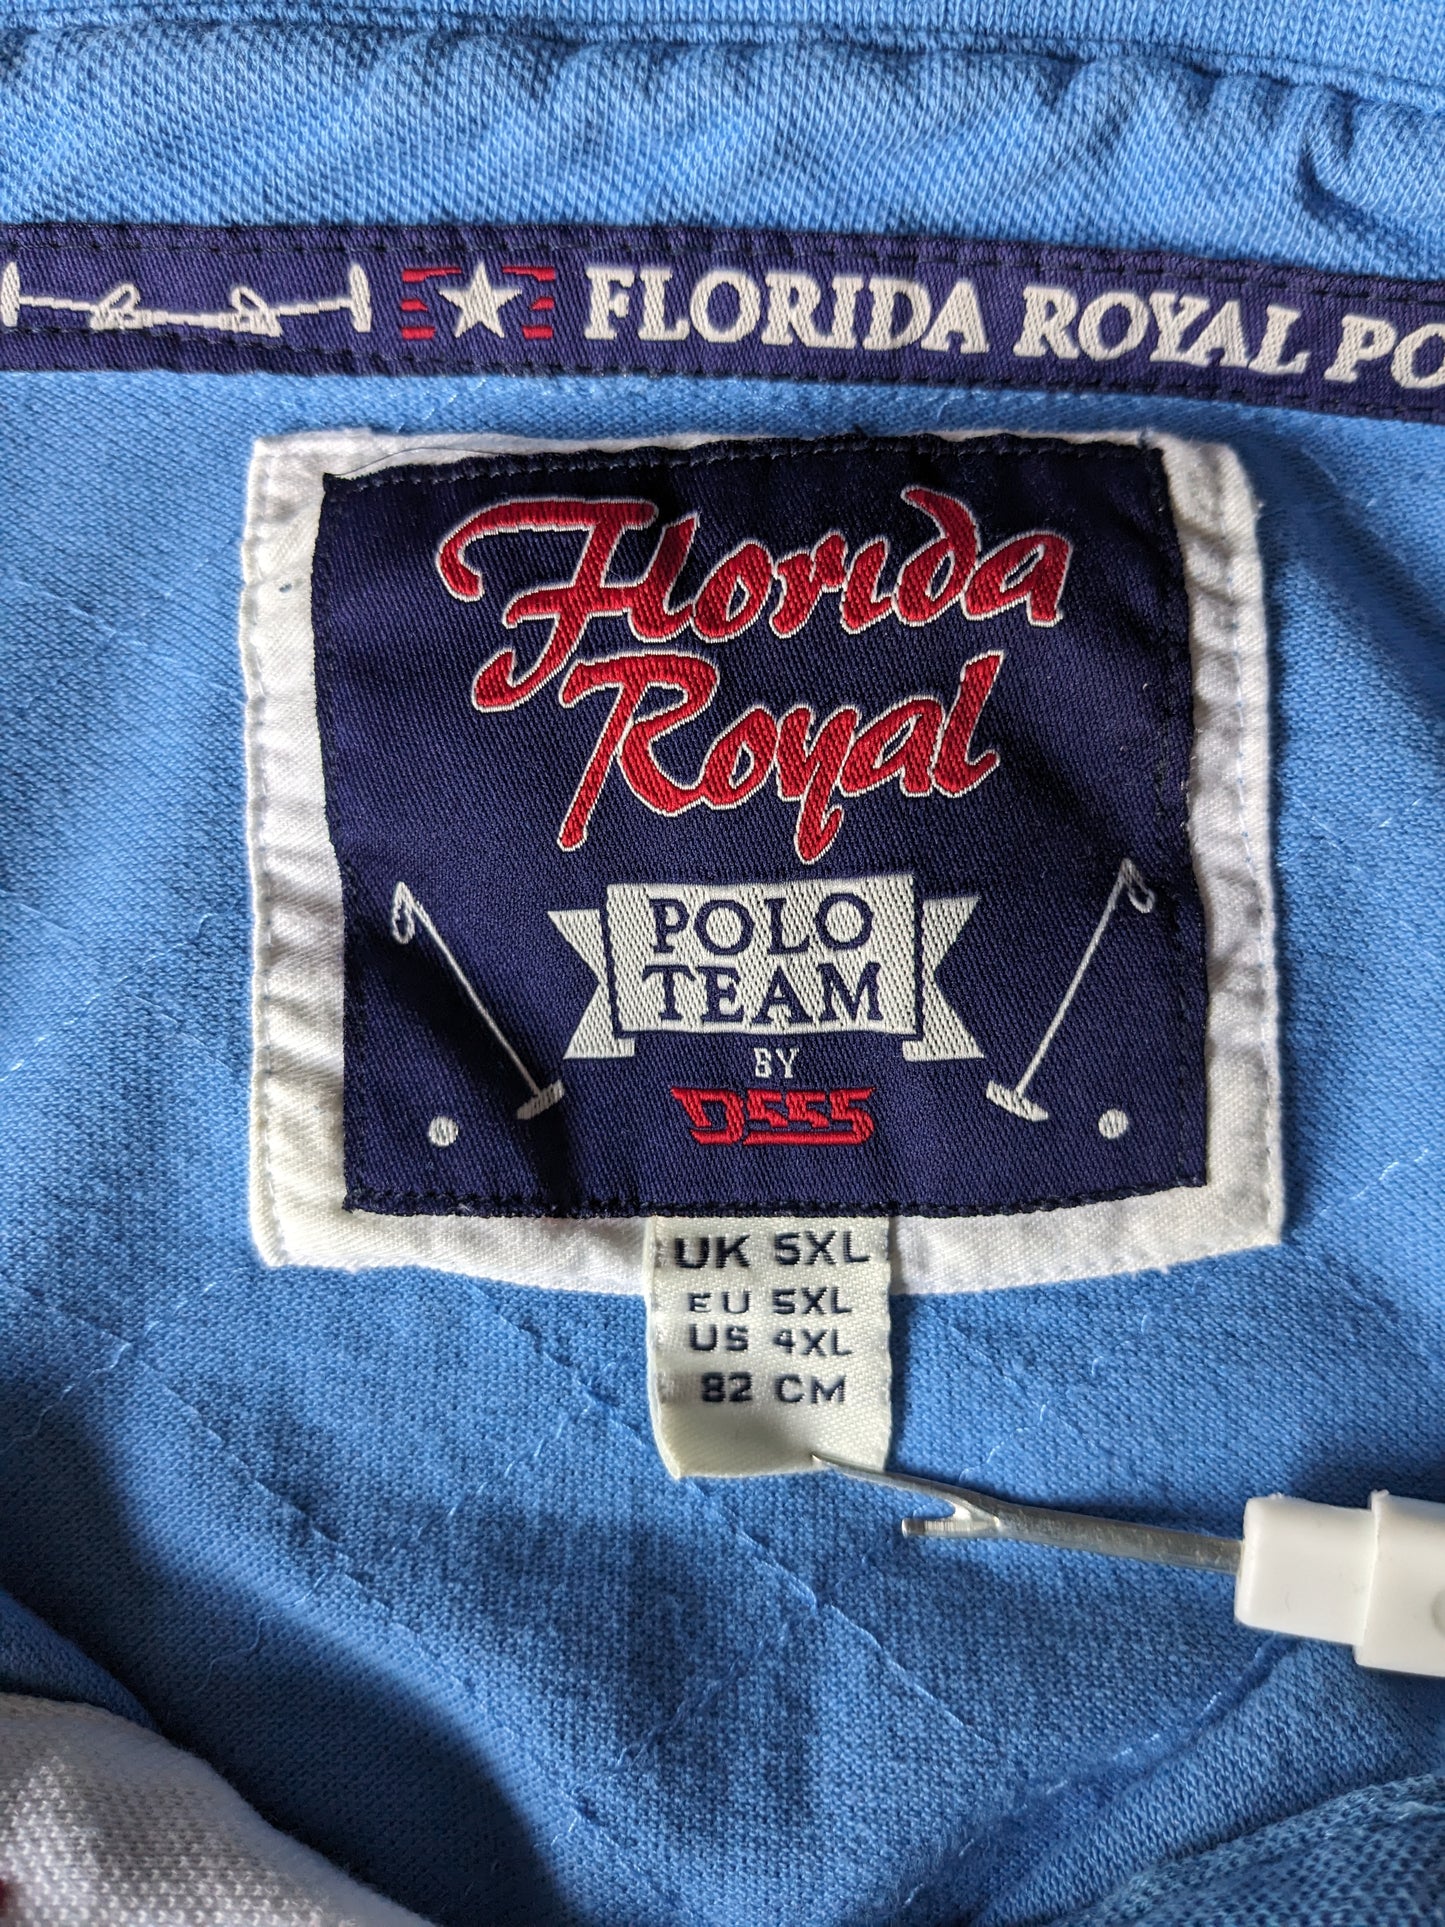 Florida Royal Polo. Blu con applicazioni ricamate. Dimensione 5xl / xxxxxl.